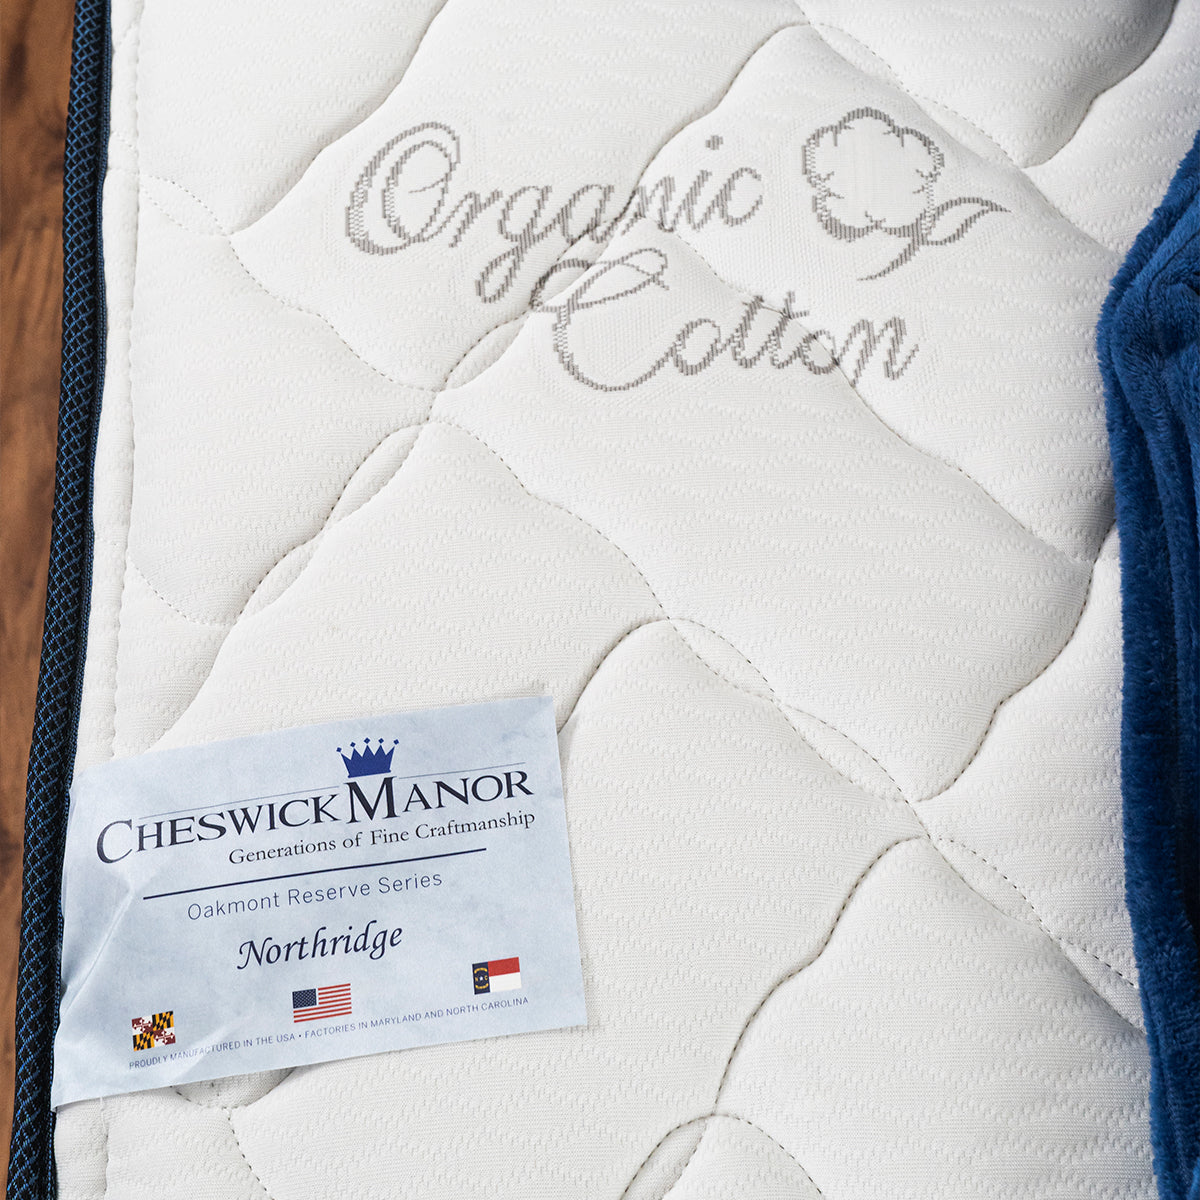 Cheswick Manor Northridge Mattress Fabric Detail And Product Tag